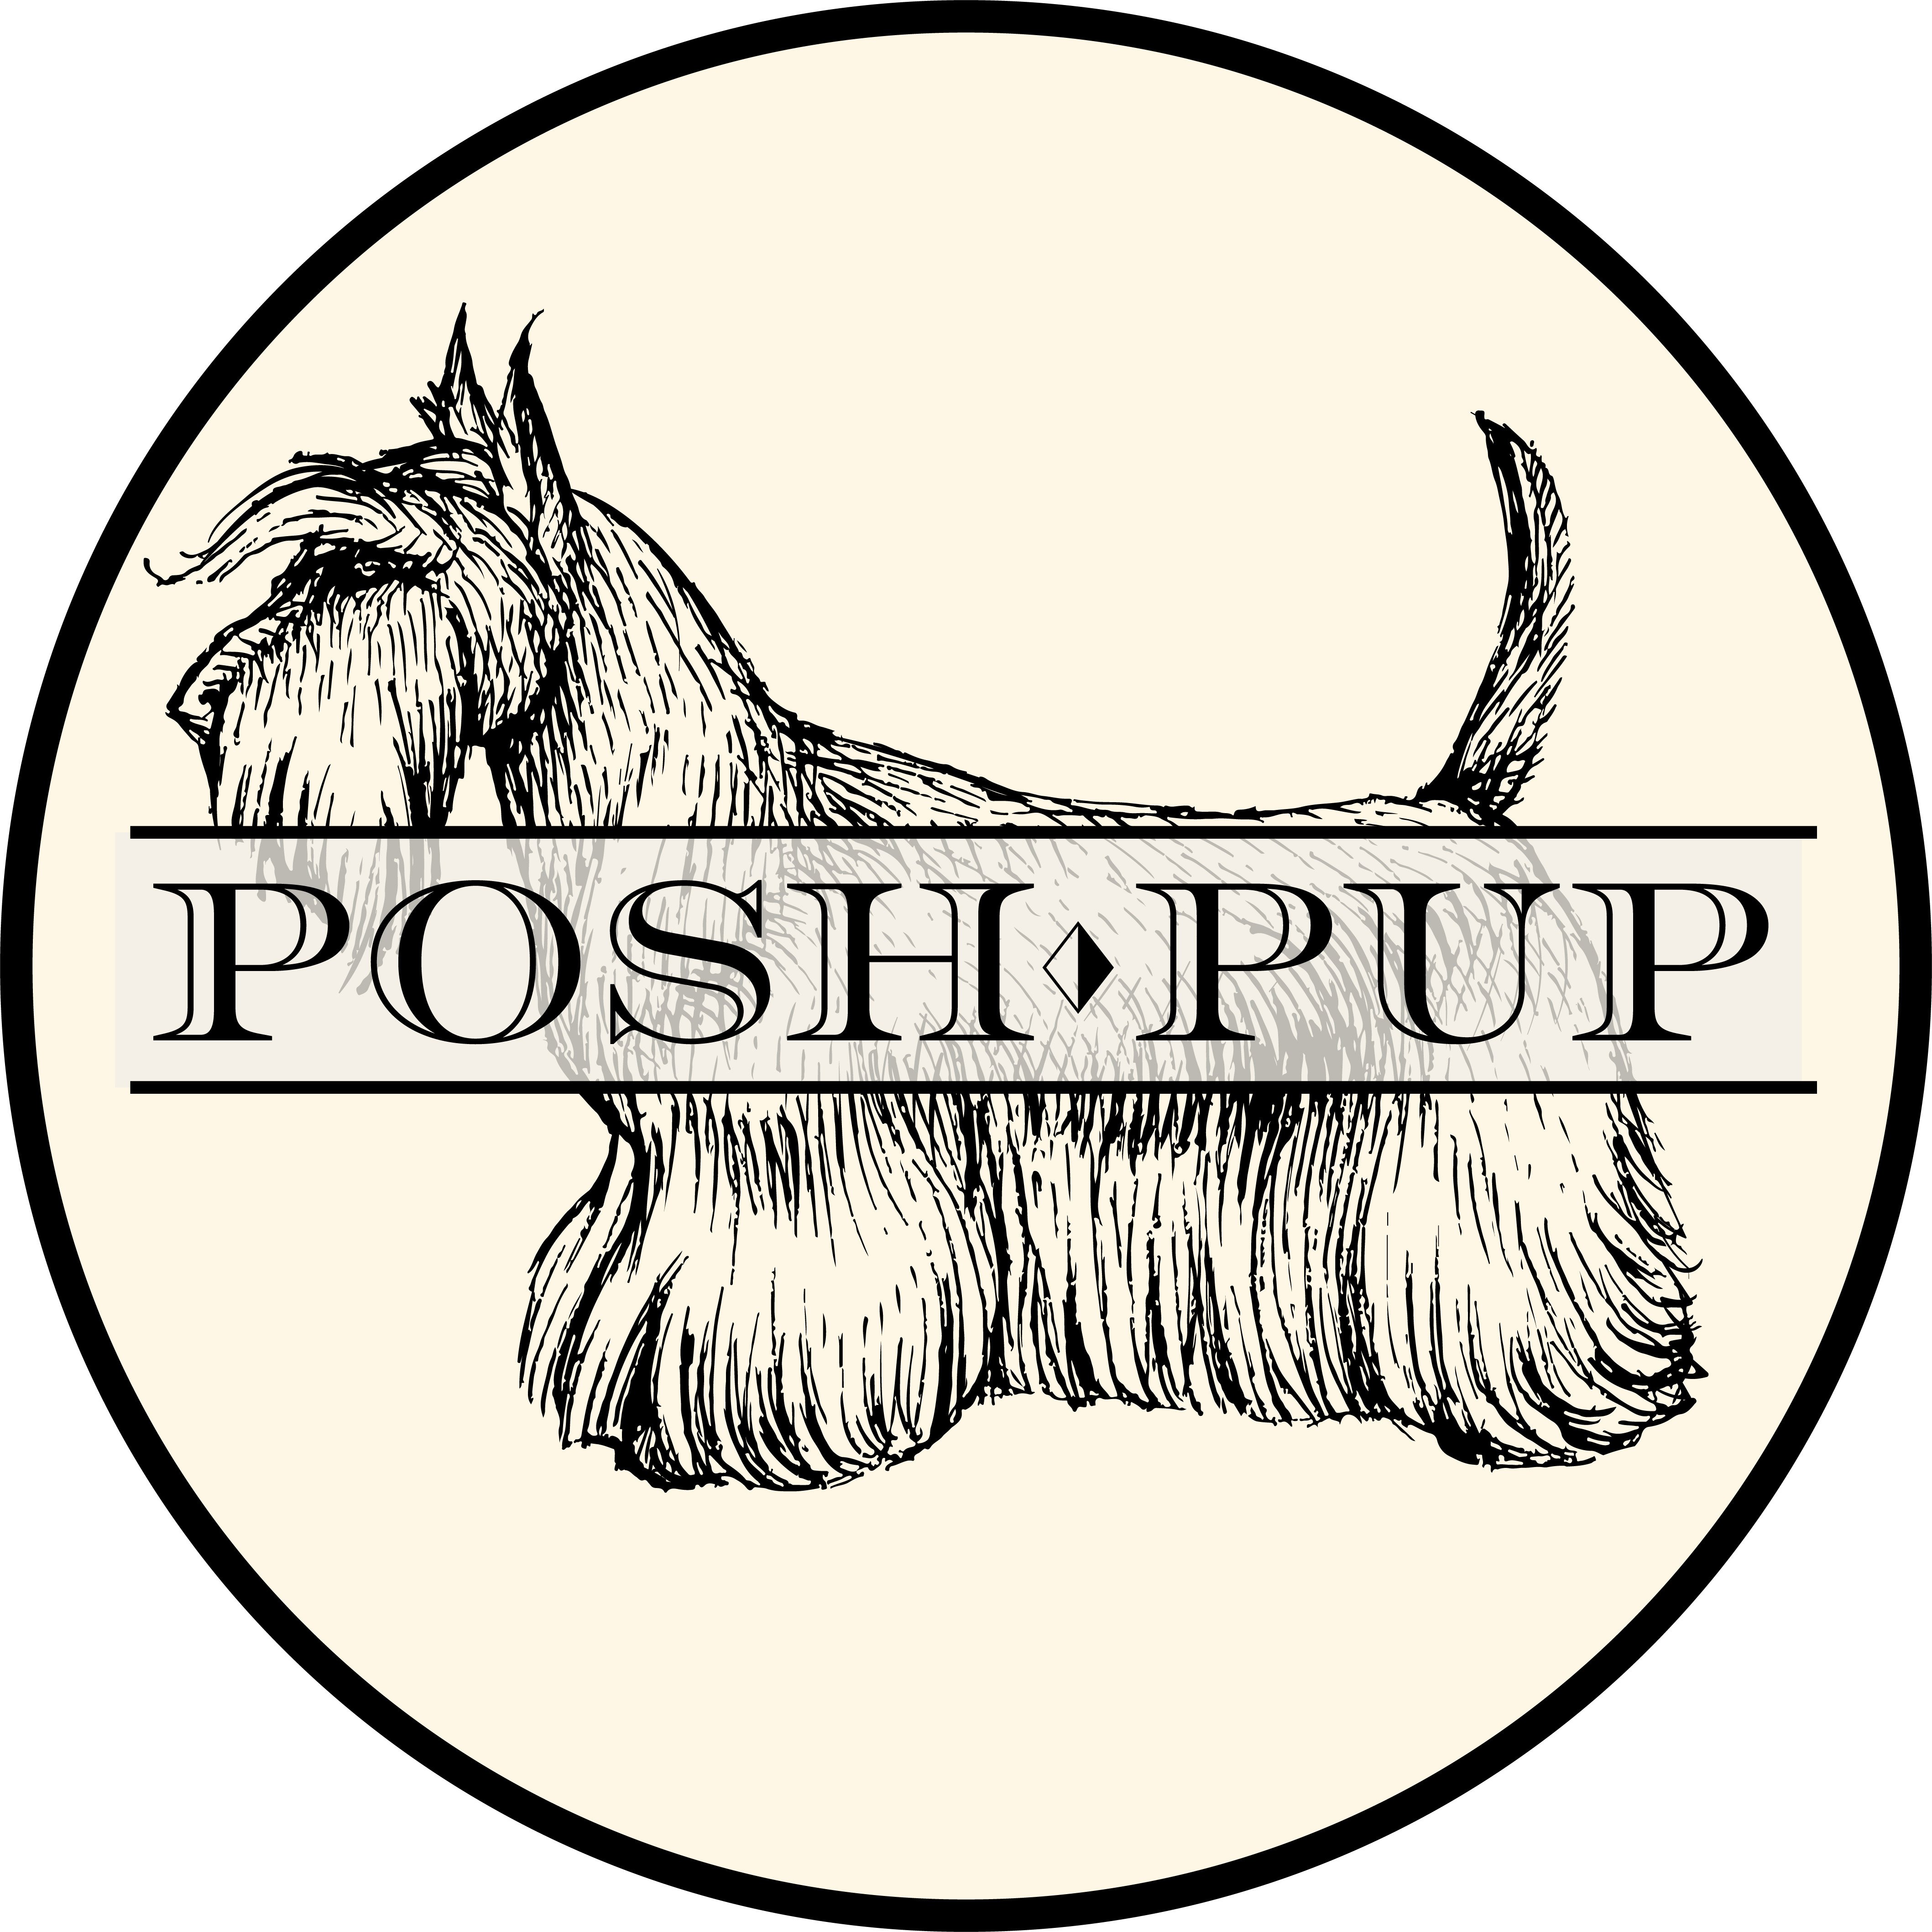 Posh pup treats logo used at ArtHouse Hotel